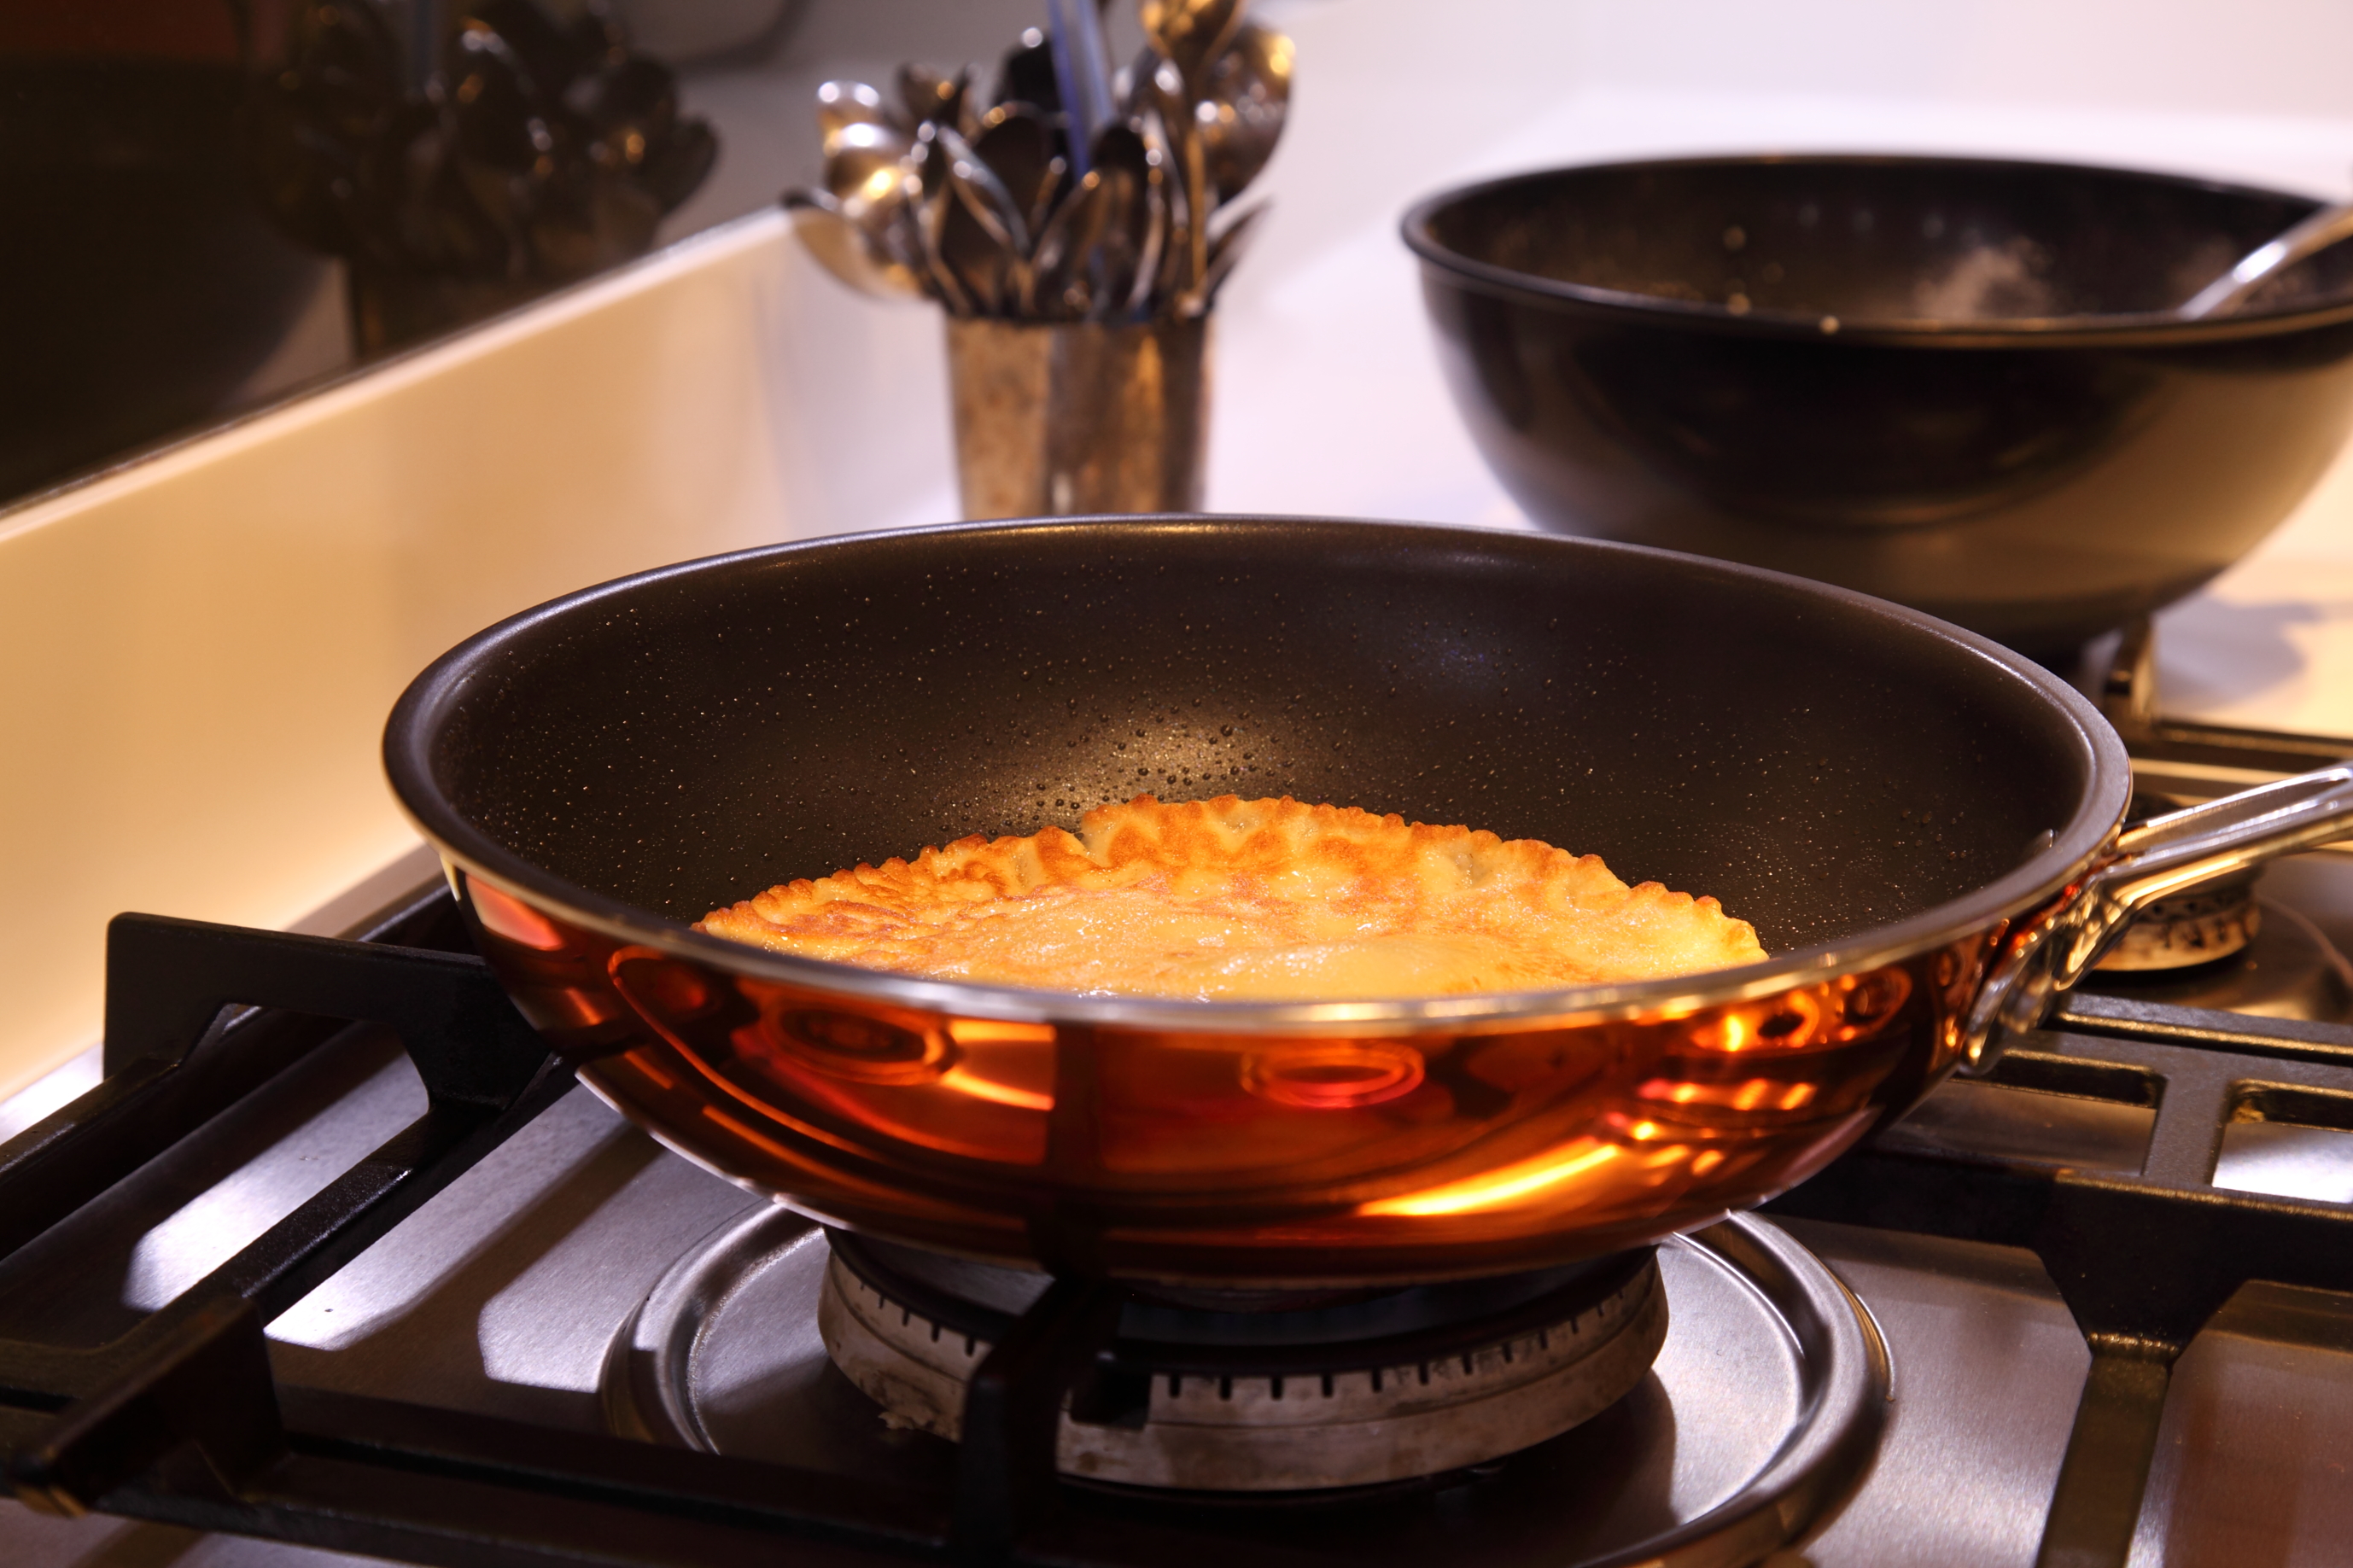 ProWare Copper Tri-Ply 24cm Non-Stick Frying Pan